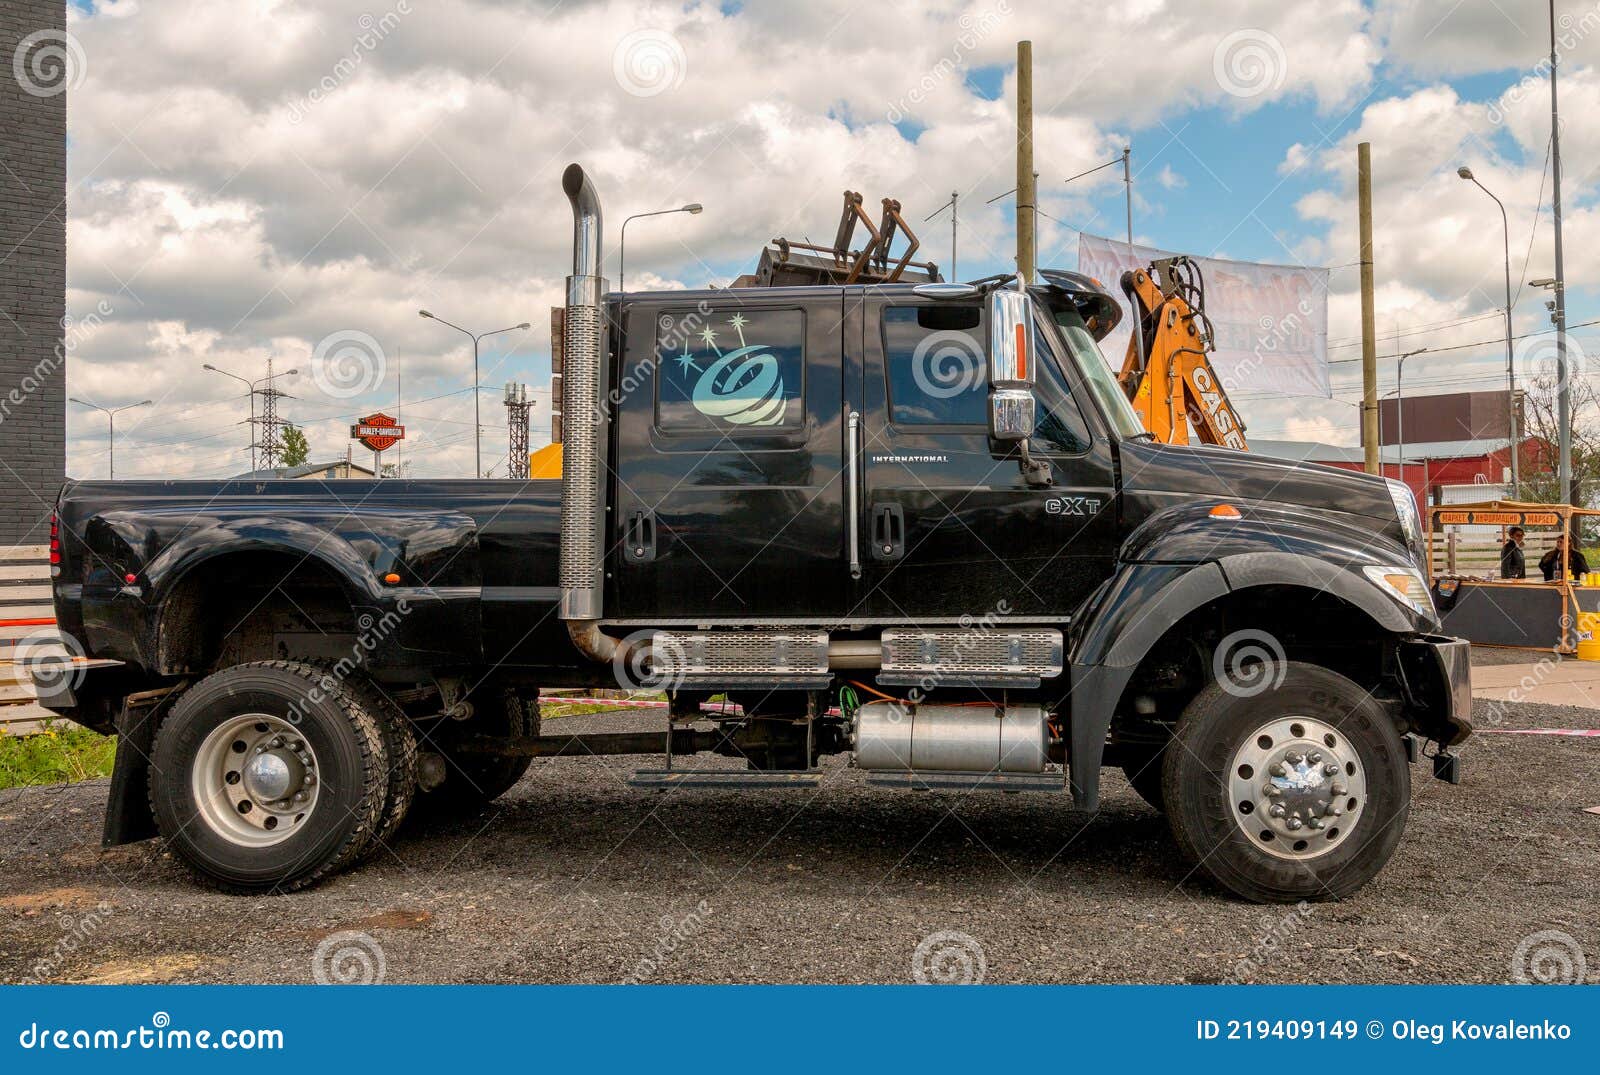 international cxt pickup truck